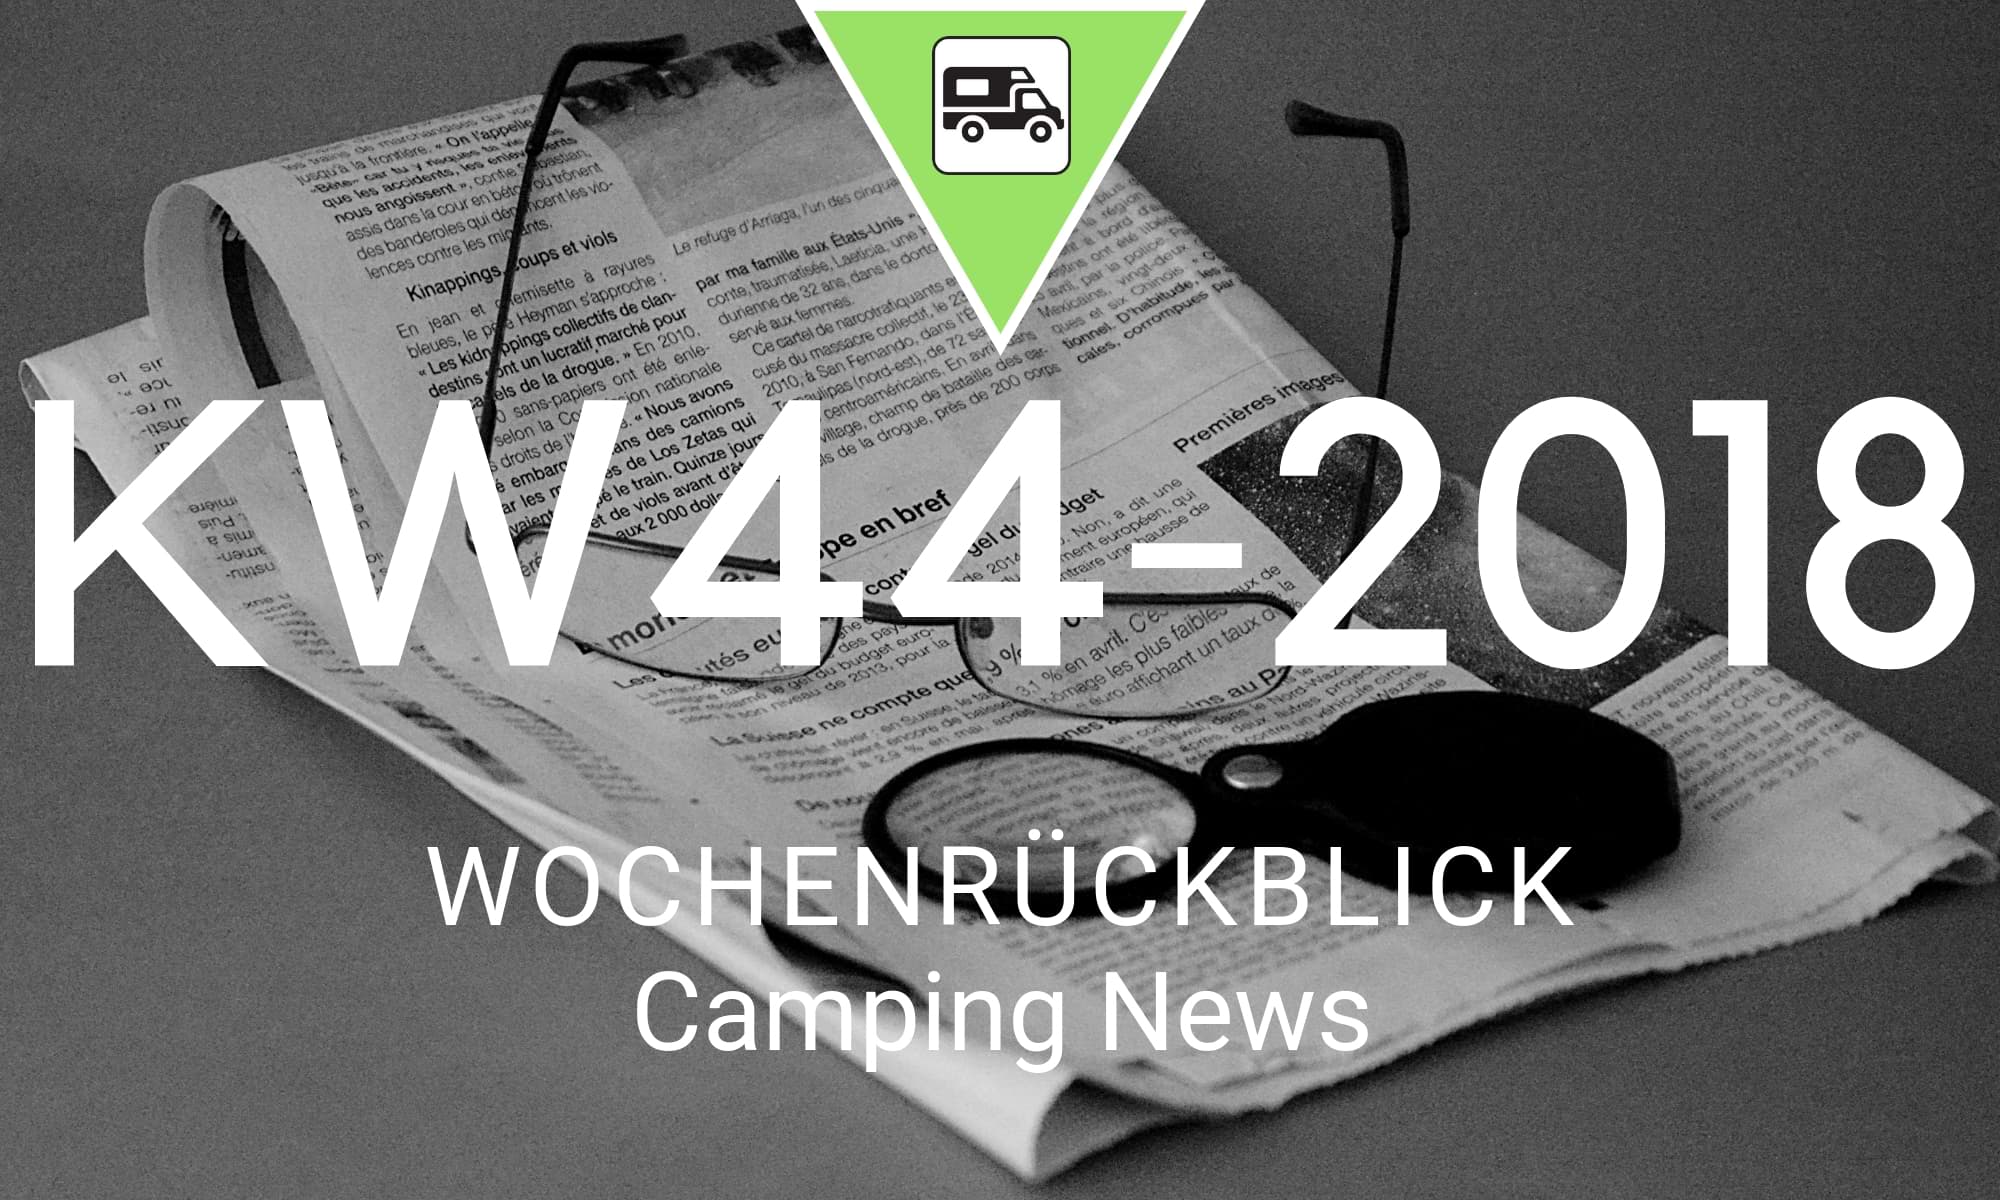 Wochenrückblick Camping News KW44-2018